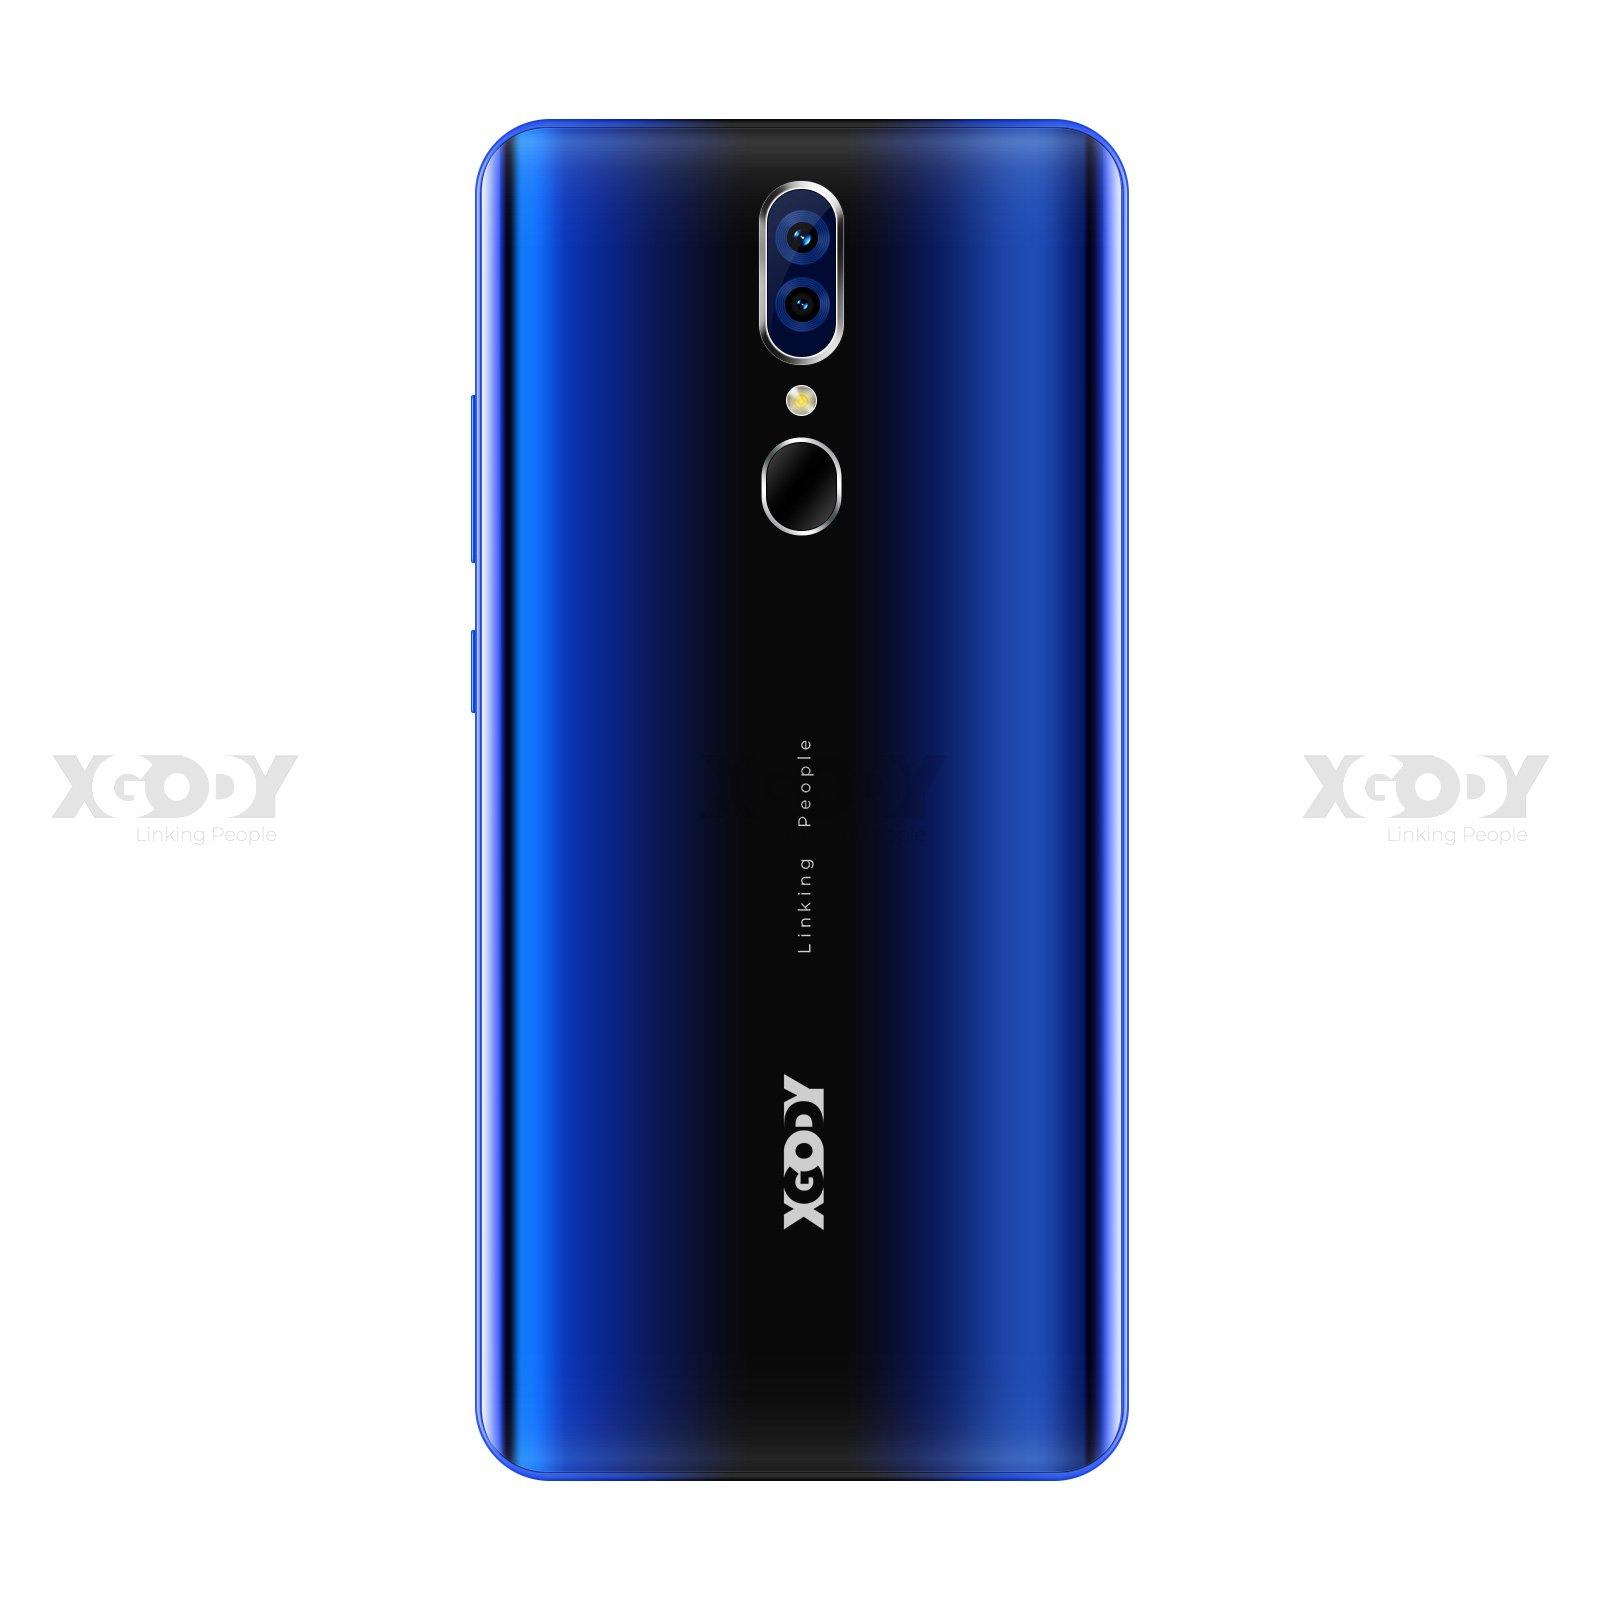 Cost-effective and Most worthwhile XGODY 9T Pro Dual Sim 3G Unlock Smartphone - XGODY 